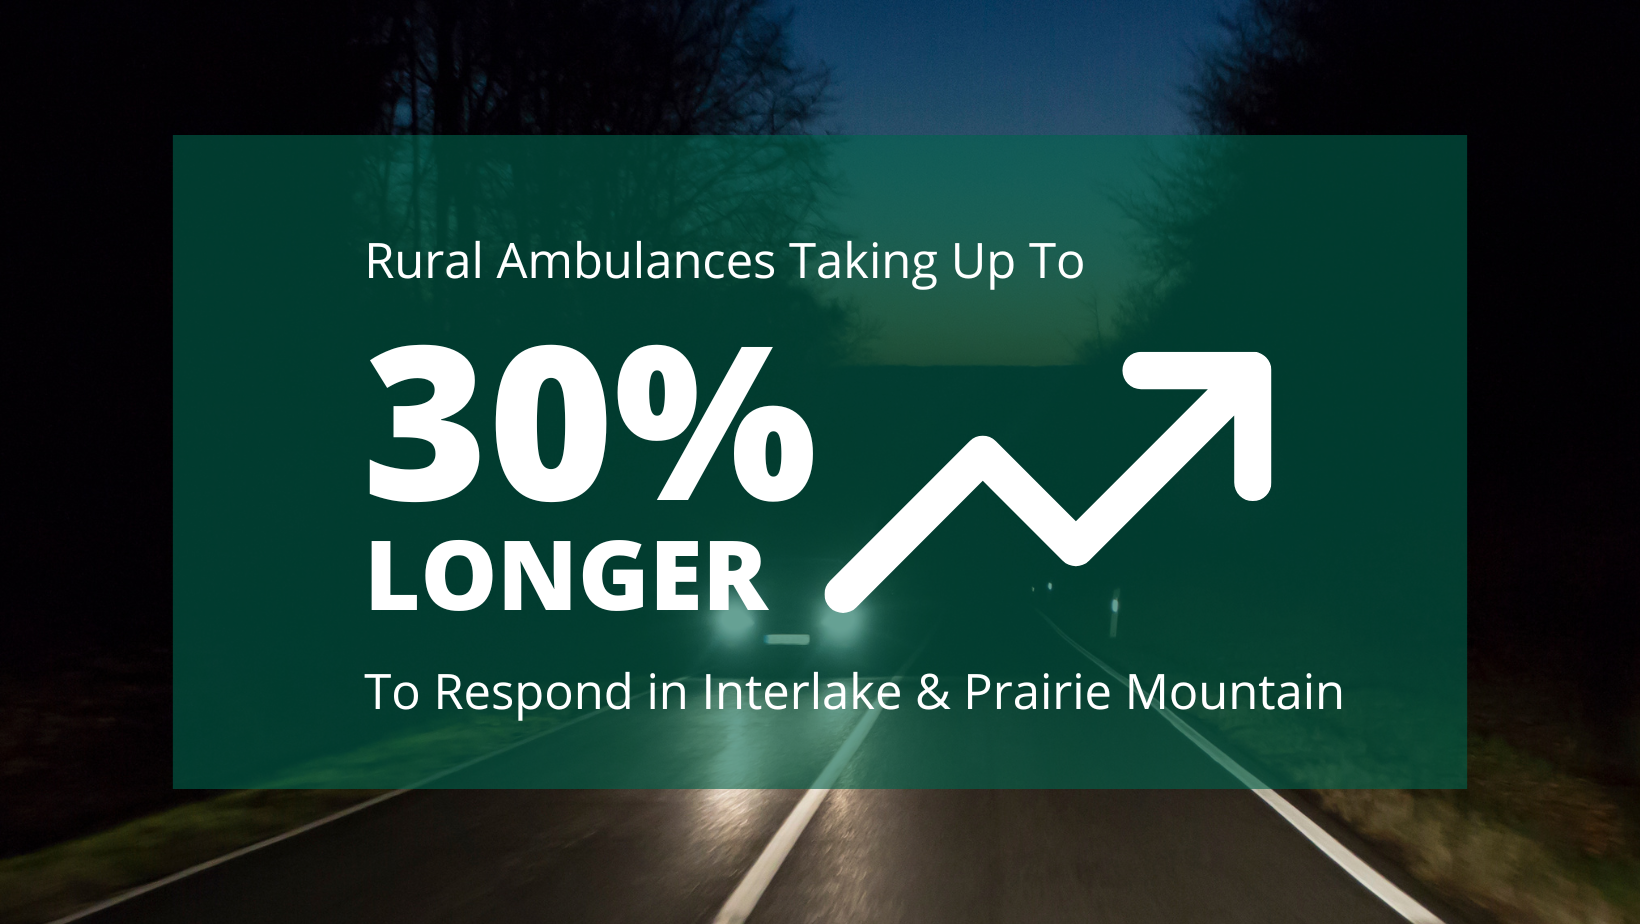 Media Release: Rural Ambulances Taking Longer to Respond